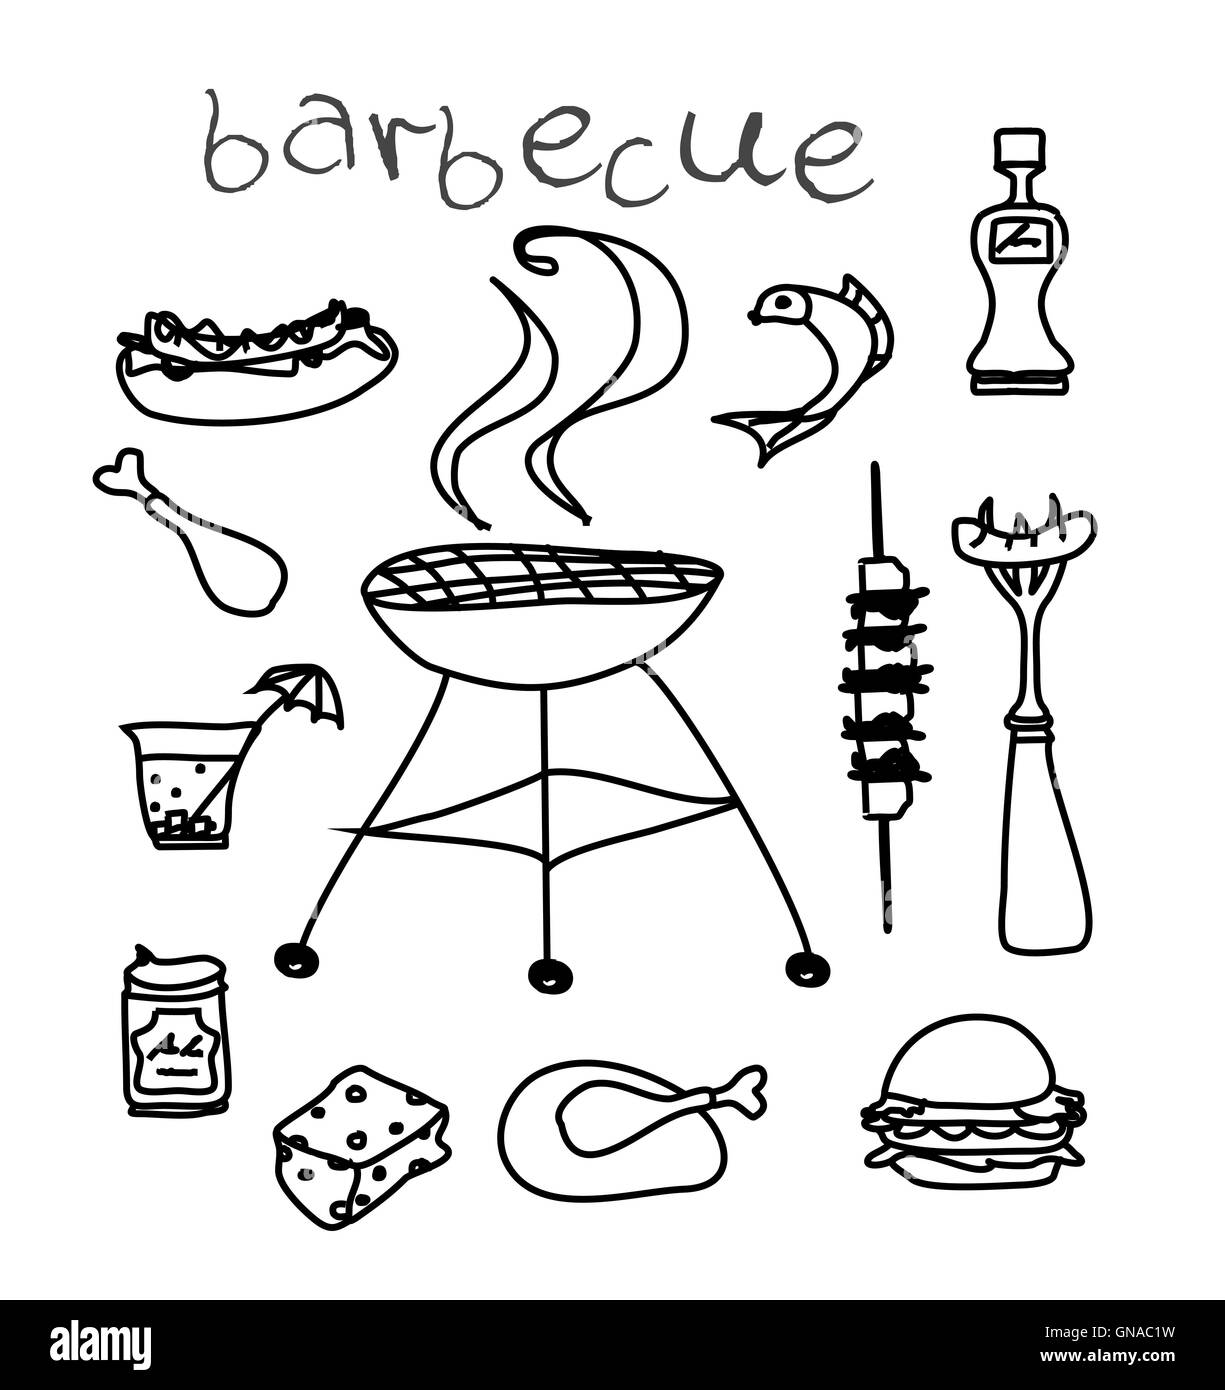 Barbecue icon doodle vector set Stock Photo